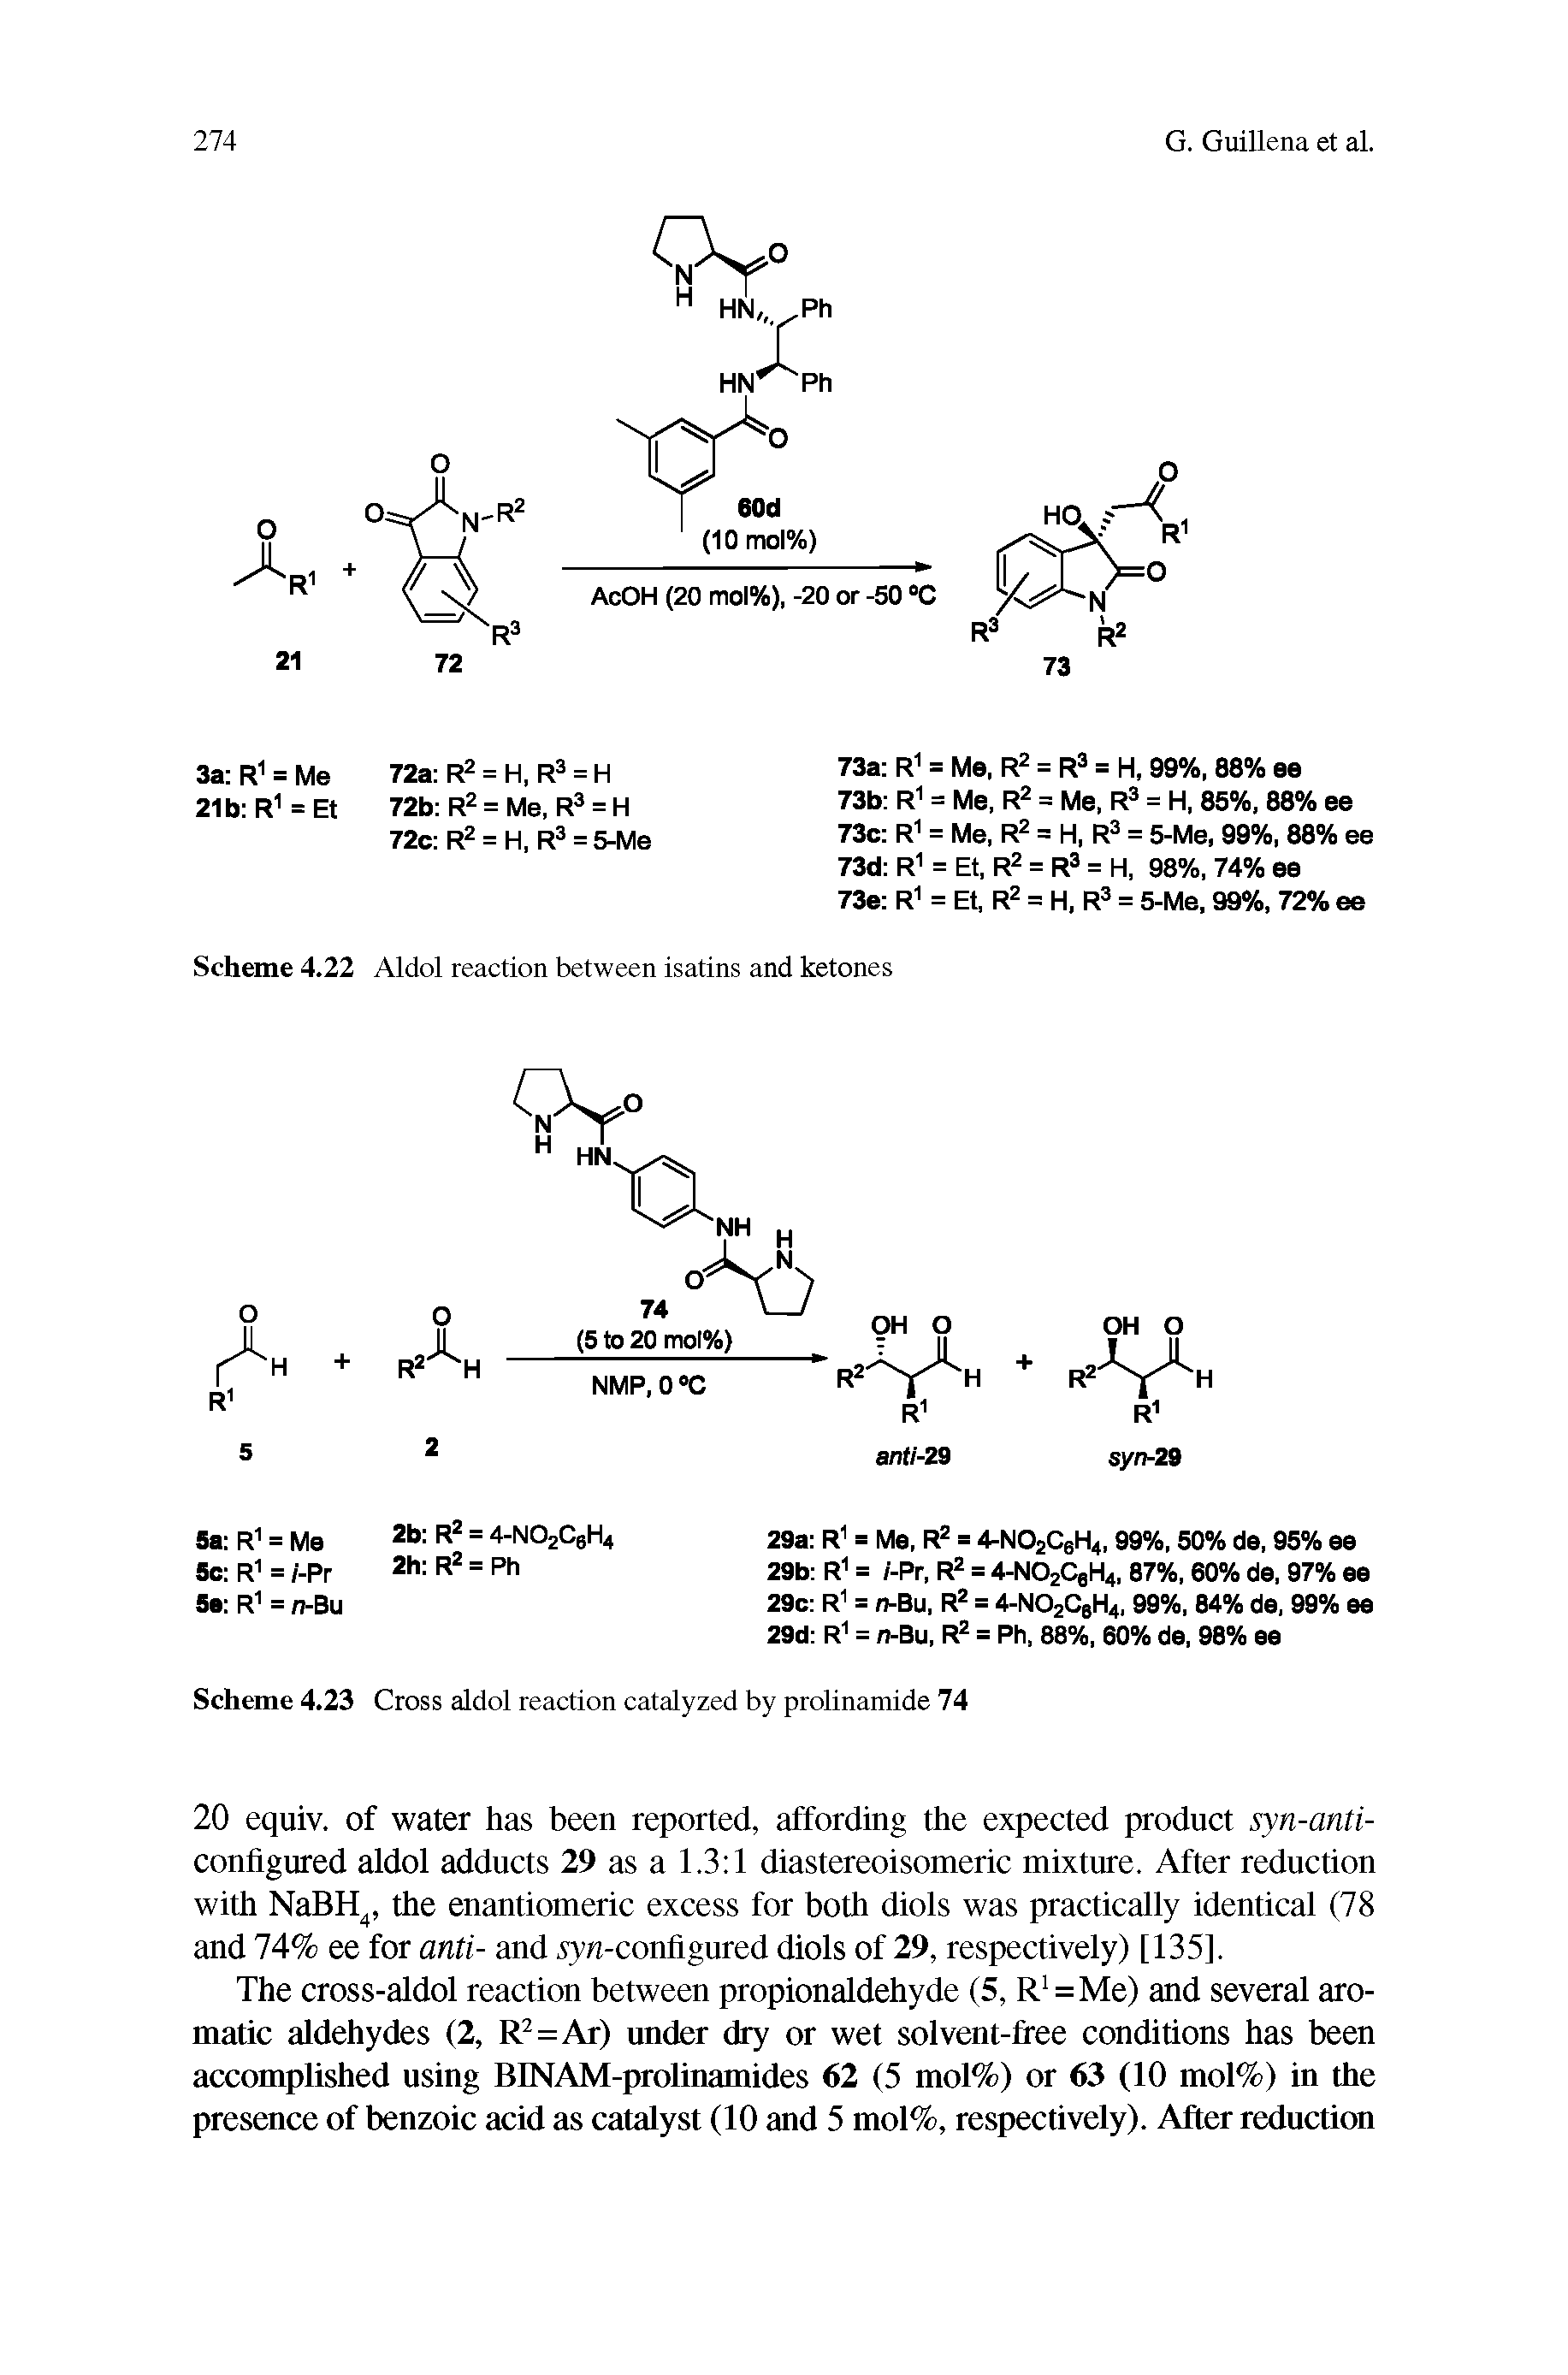 Scheme 4.22 Aldol reaction between isatins and ketones...